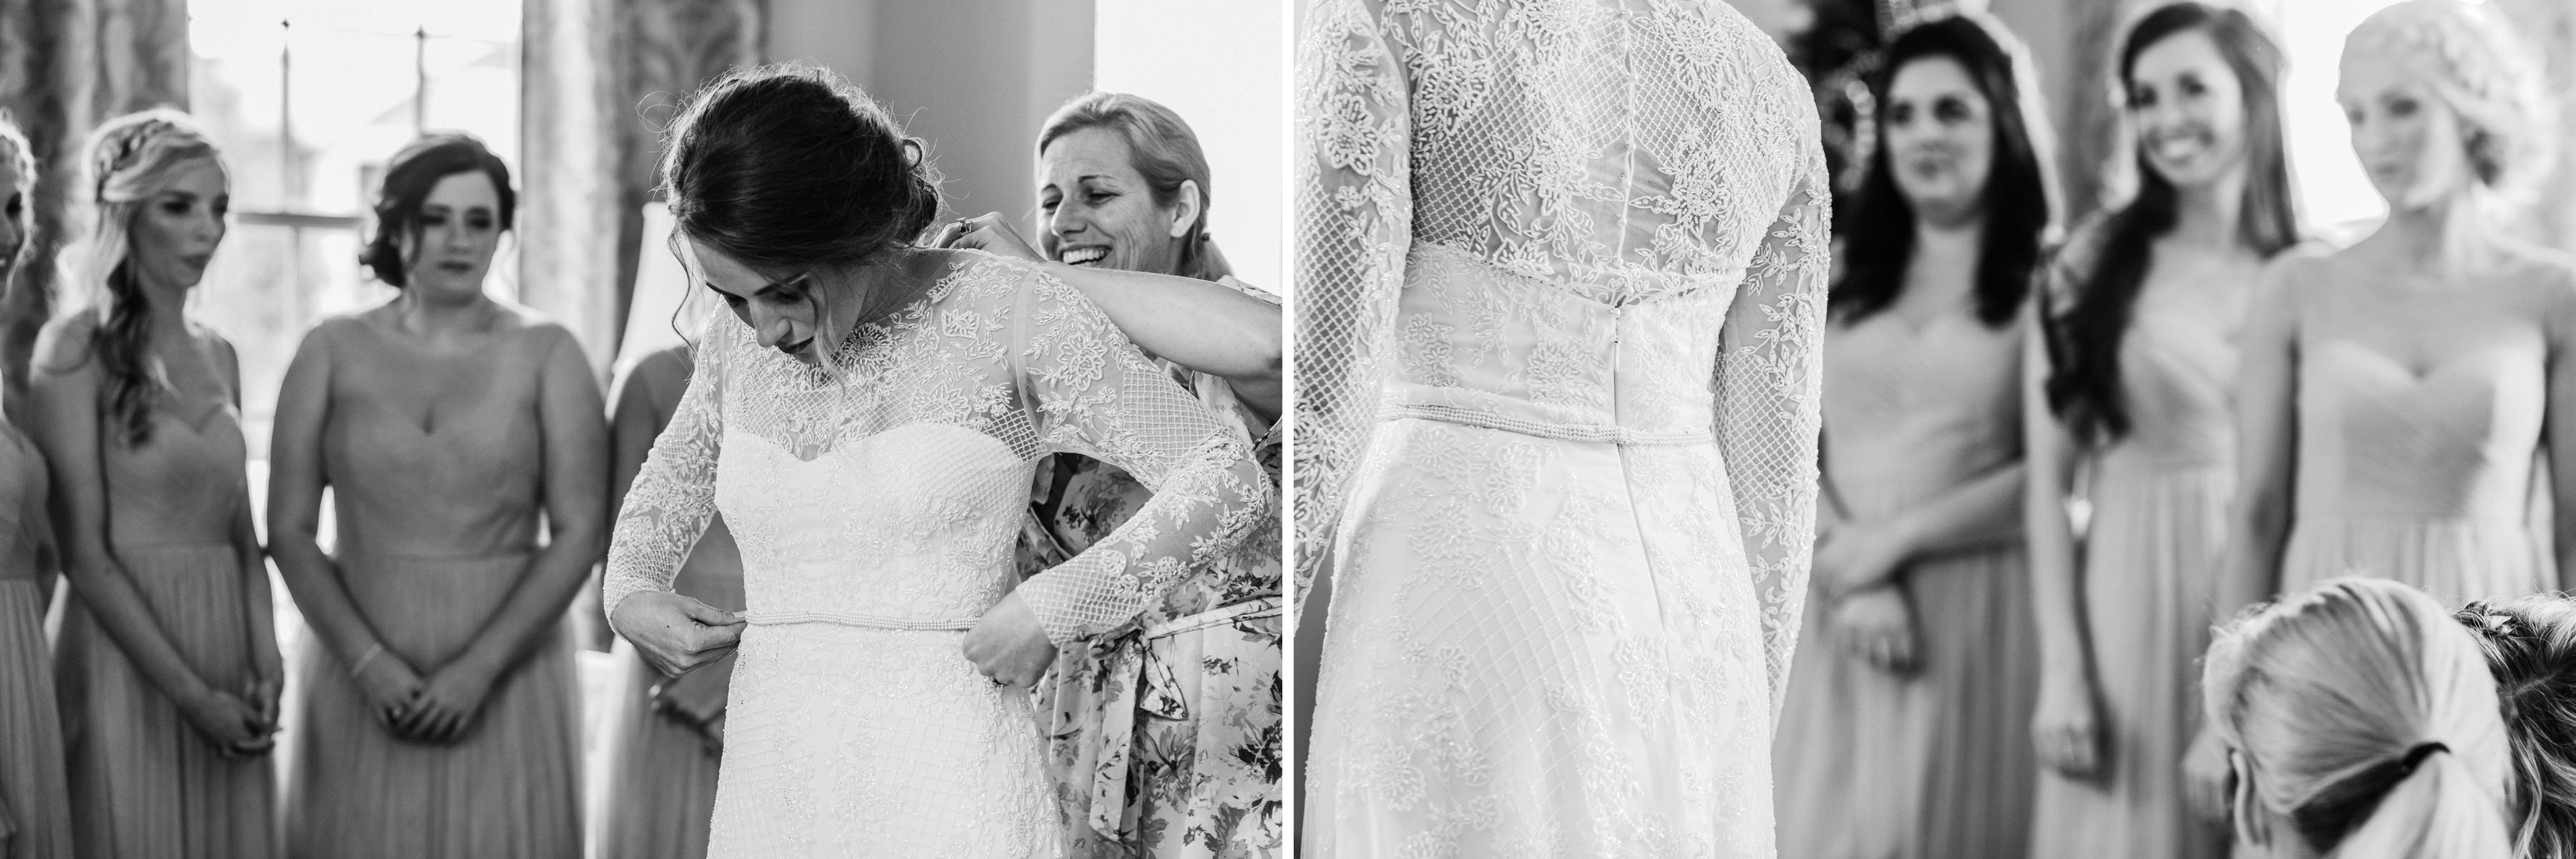 MULLET_WEDDING_NEW_ORLEANS_LOUISIANA_WEDDING_PHOTOGRAPHY_31